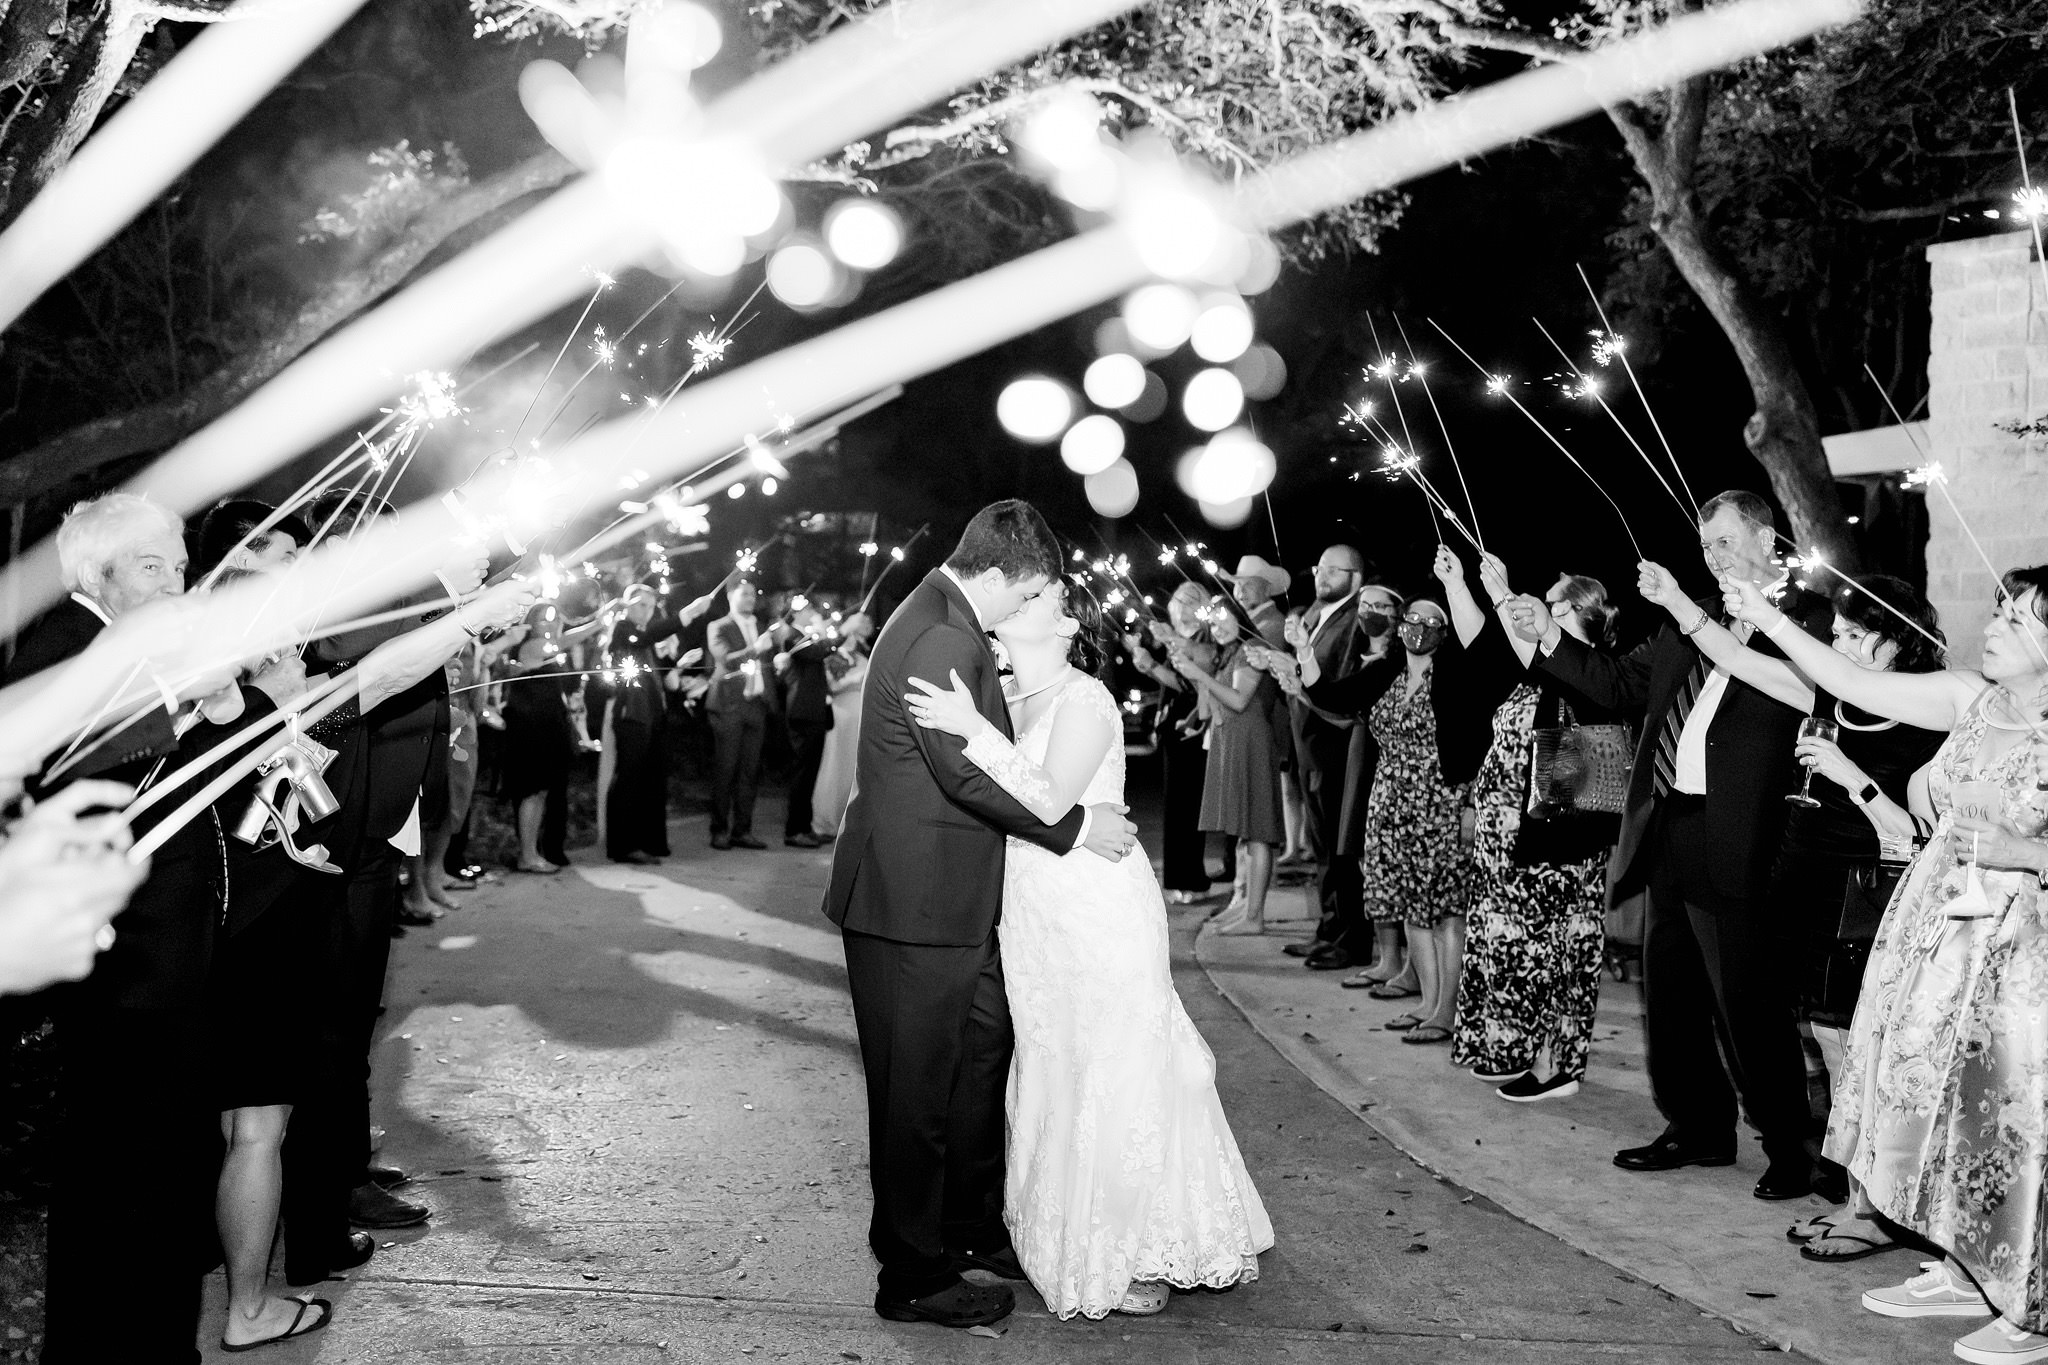 A Sage & Navy Wedding at Hyatt Hill Country Resort in San Antonio, TX by Dawn Elizabeth Studios, San Antonio Wedding Photographer